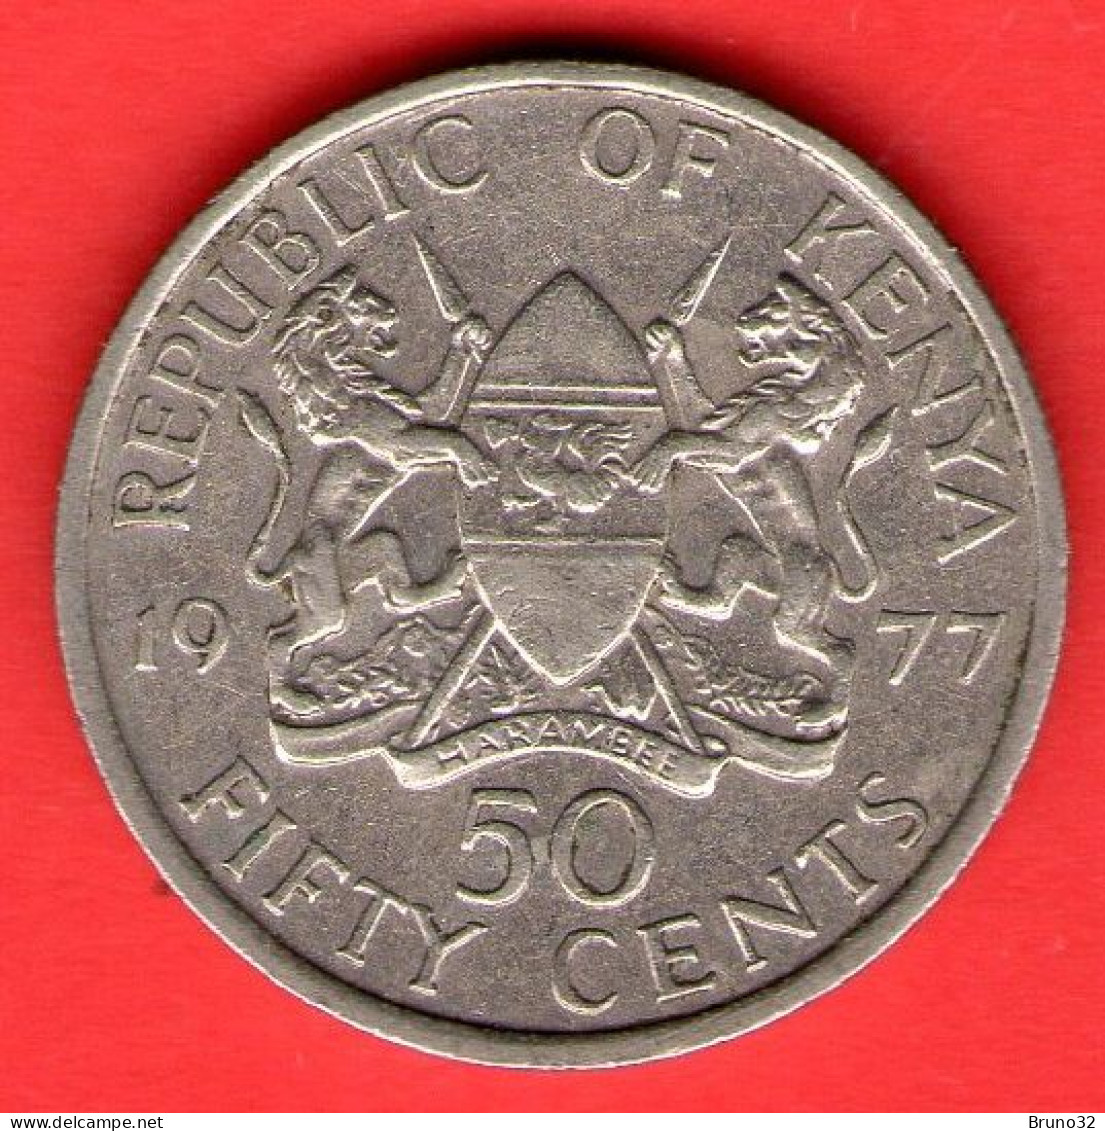 Kenia - Kenya - 1977 - 50 Cents - SPL/XF - Come Da Foto - Kenya